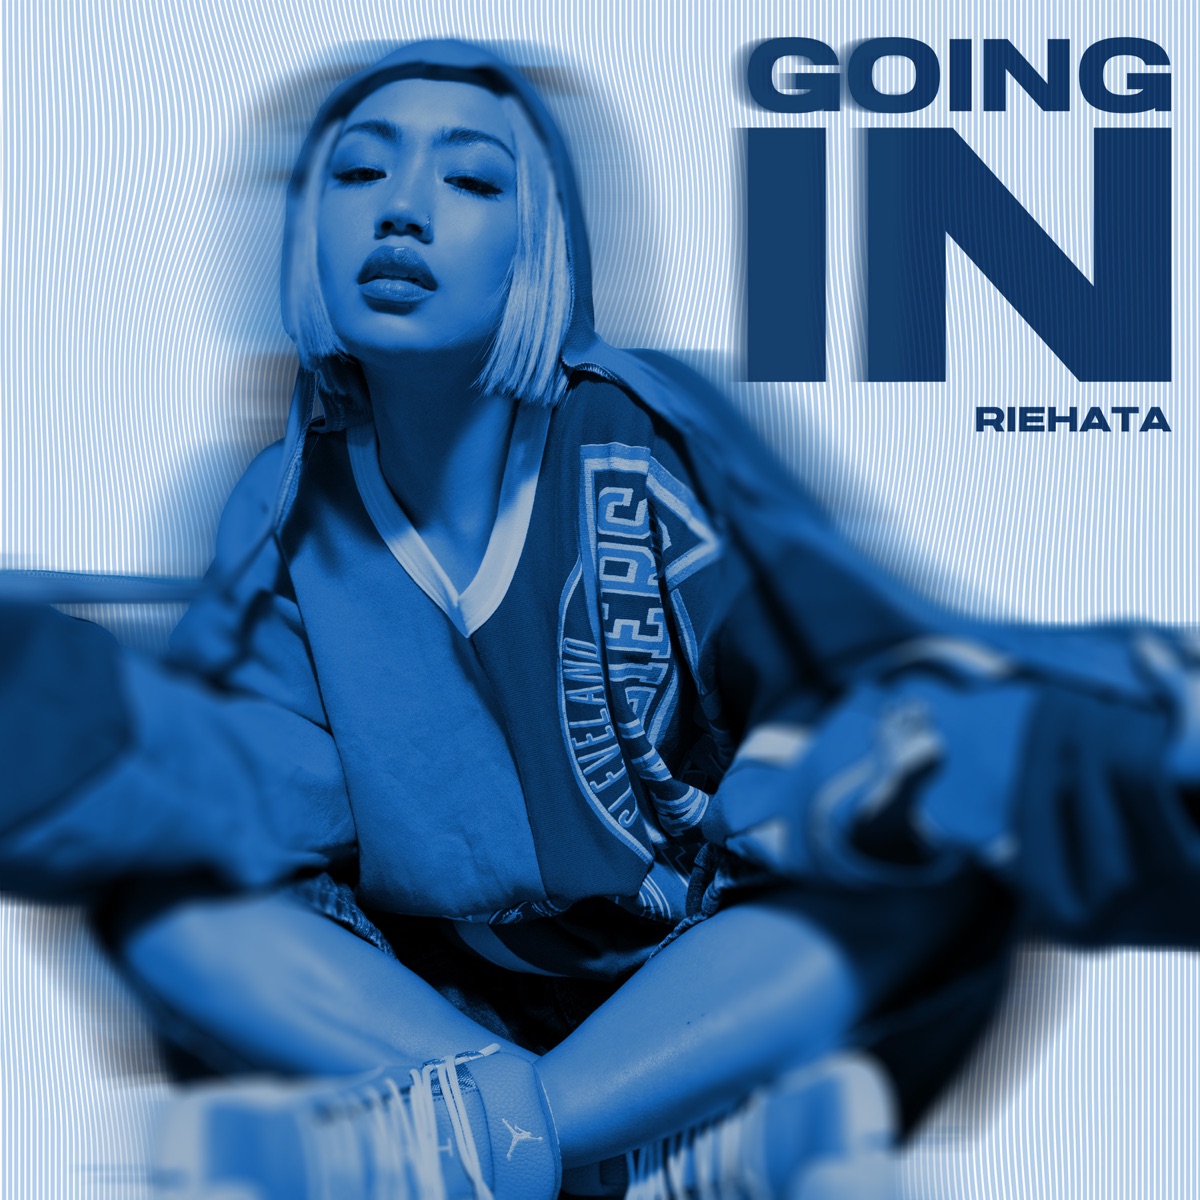 『RIEHATA - GOING IN』収録の『GOING IN』ジャケット